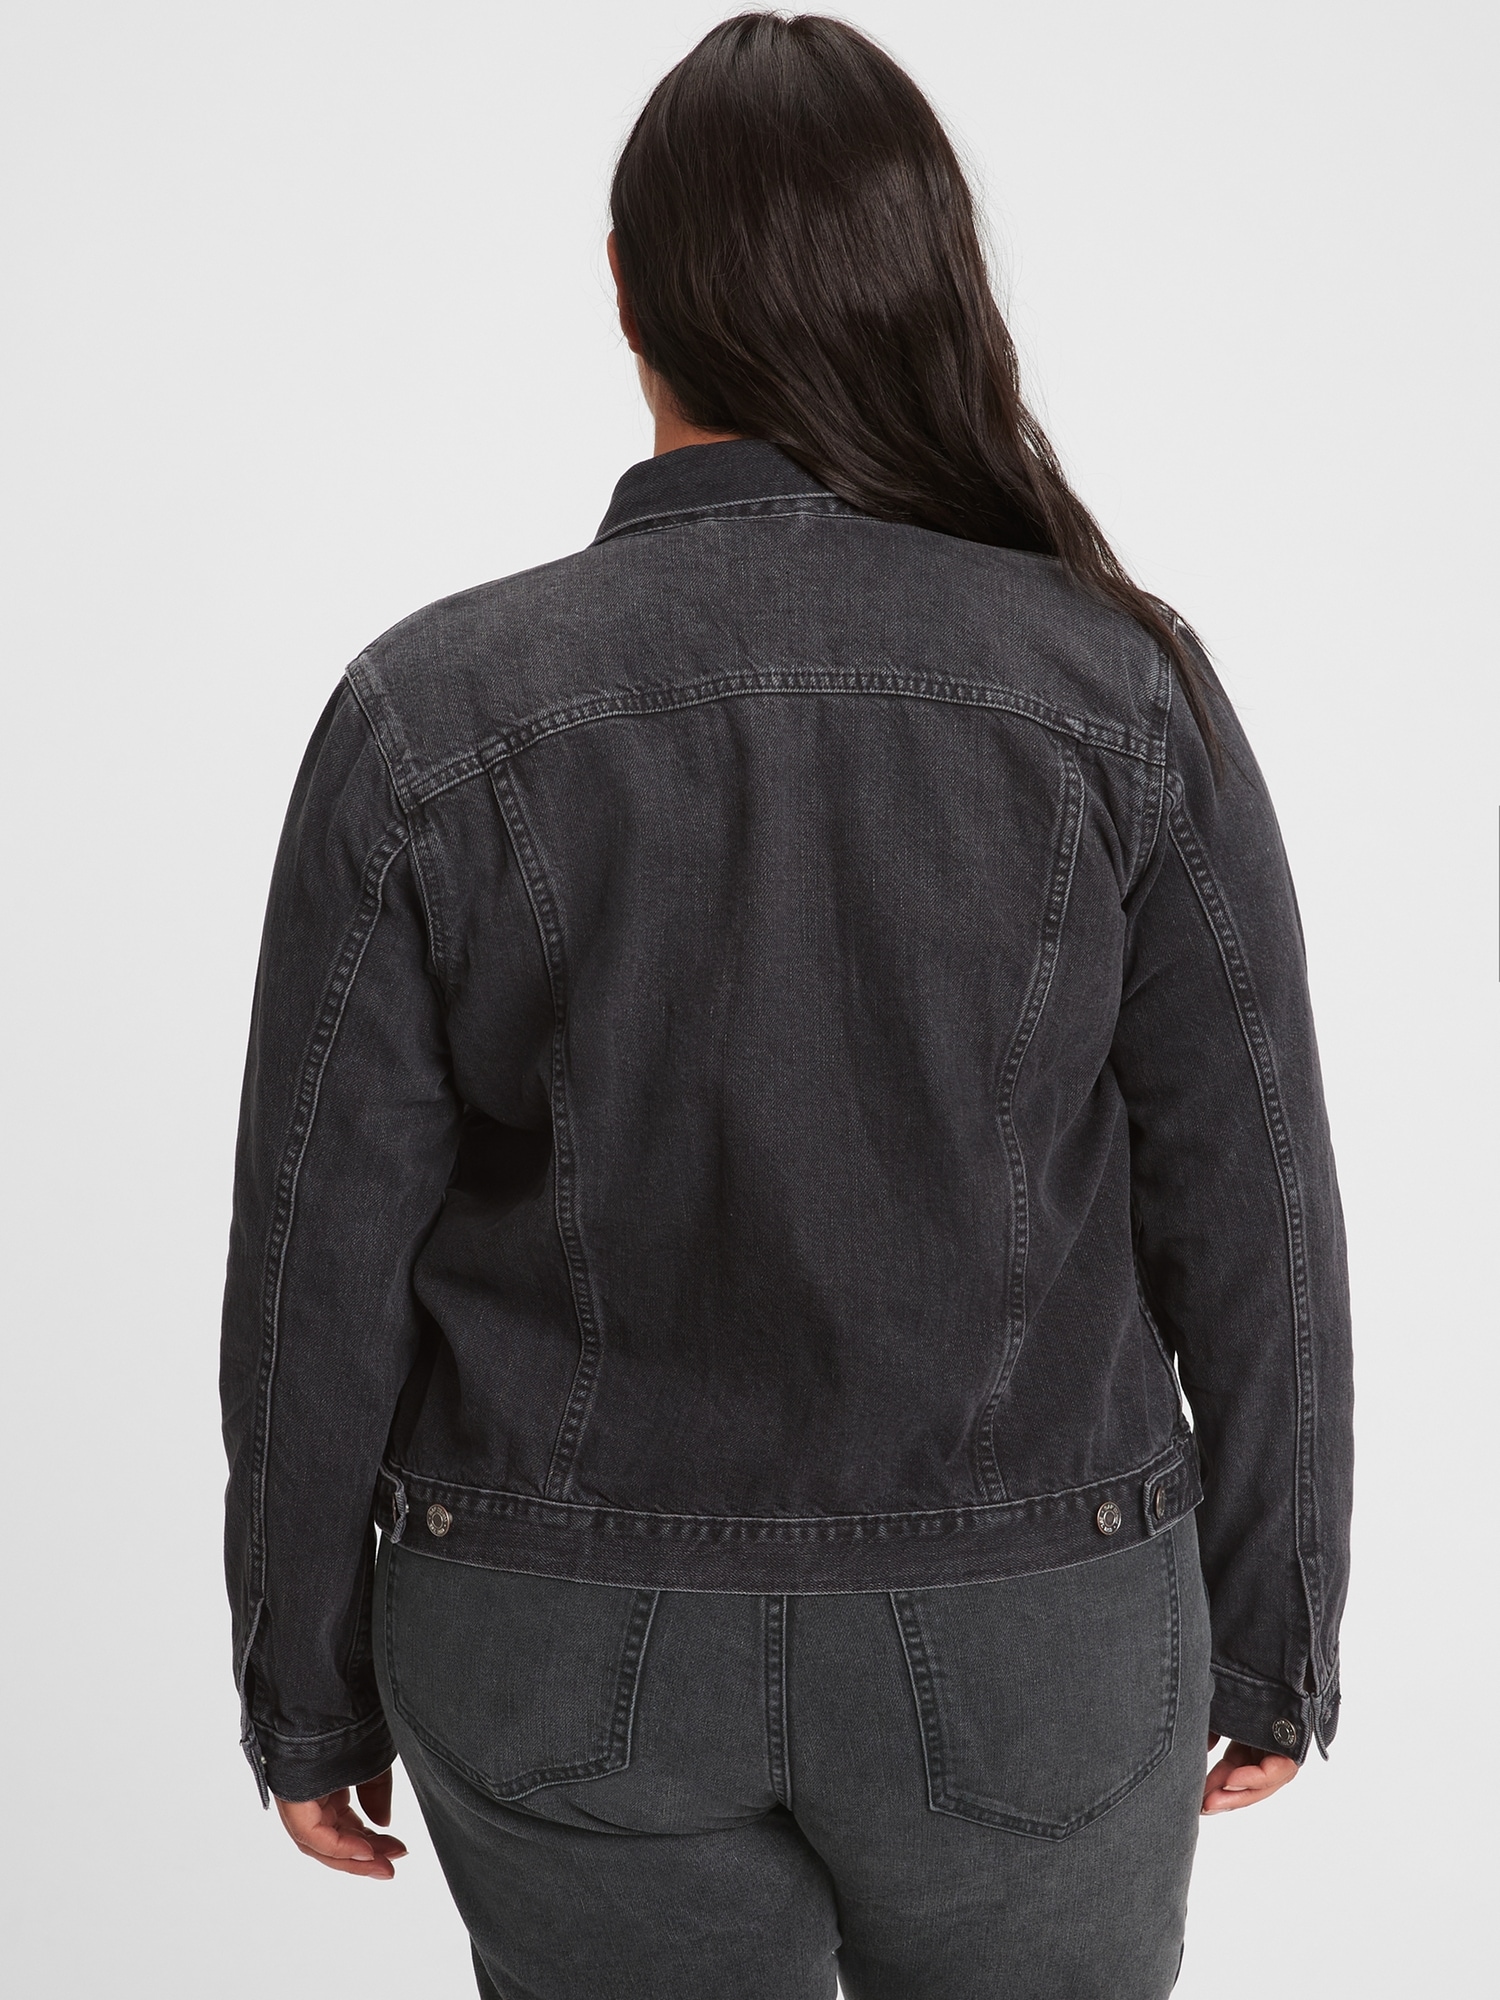 Icon Denim Jacket with Washwell | Gap Factory